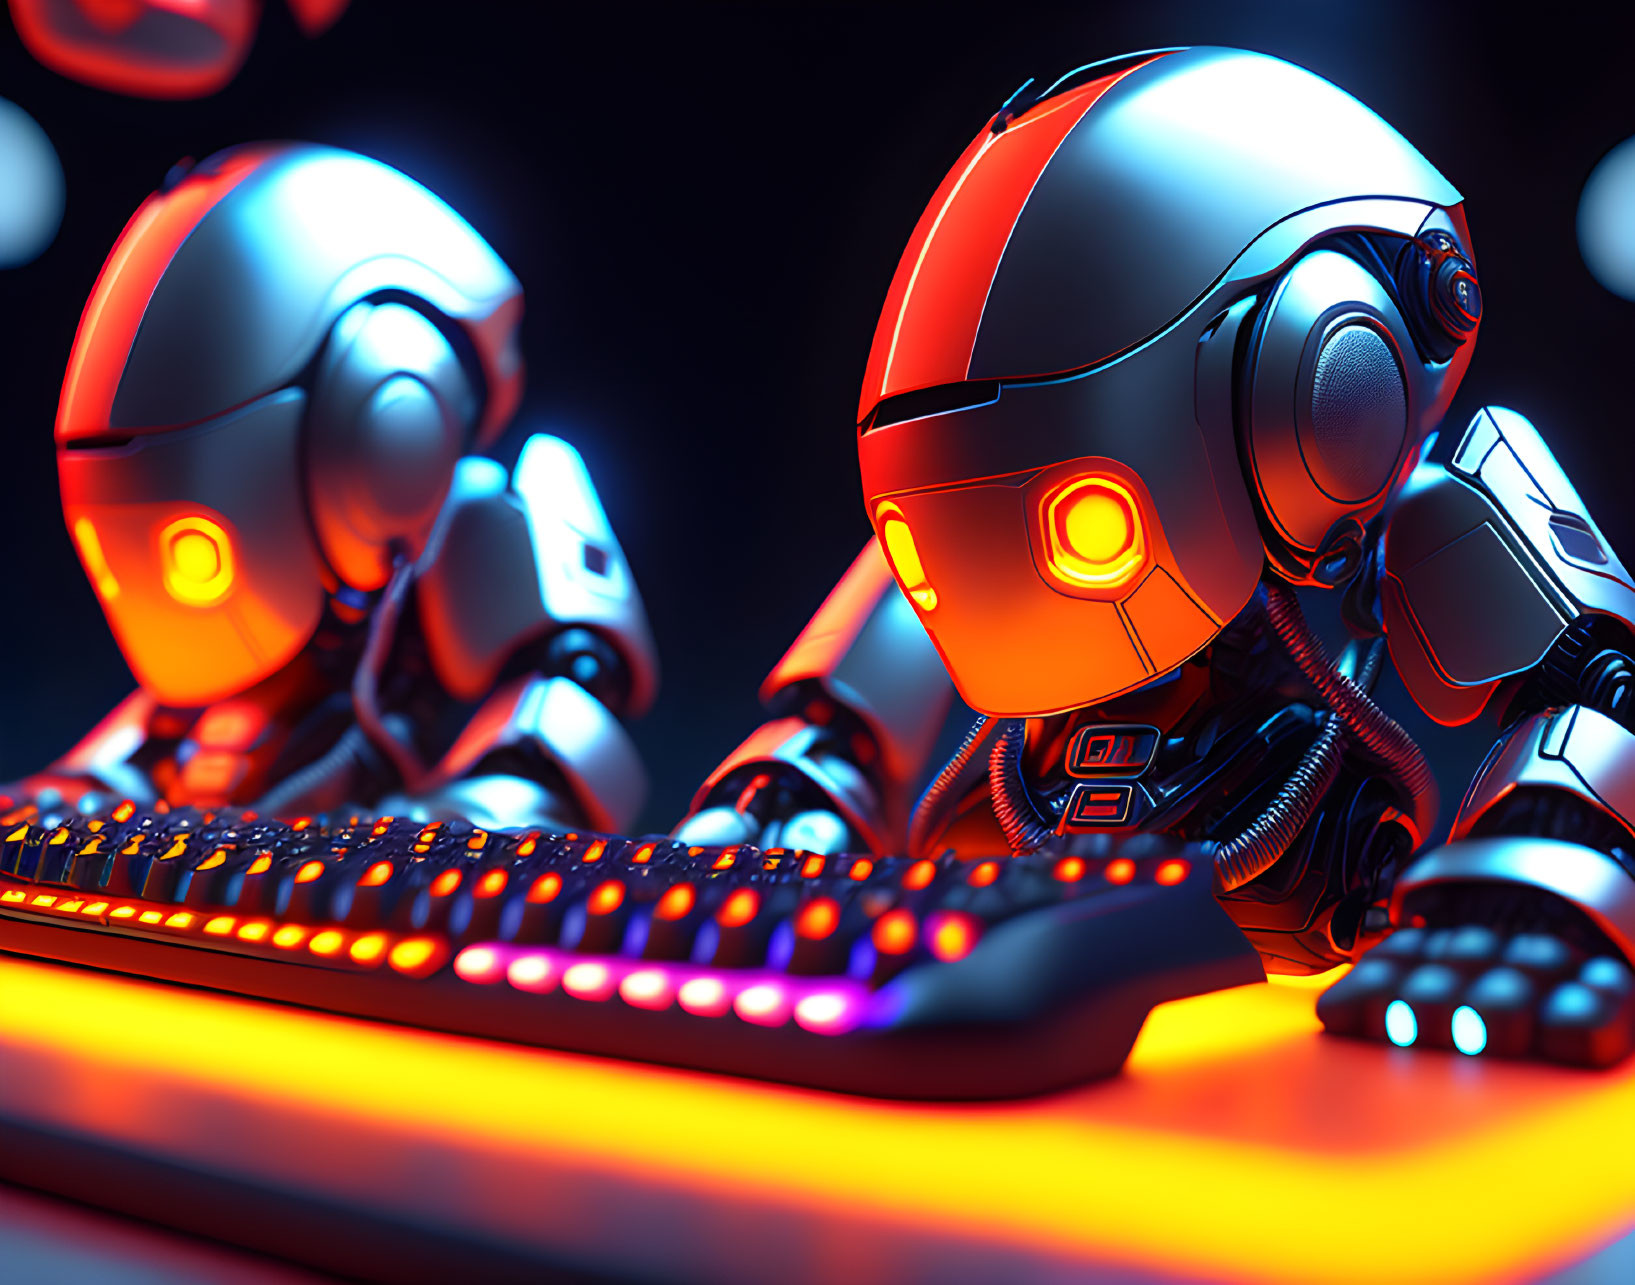 Glowing orange high-tech robots and illuminated gaming keyboard on dark neon-lit background